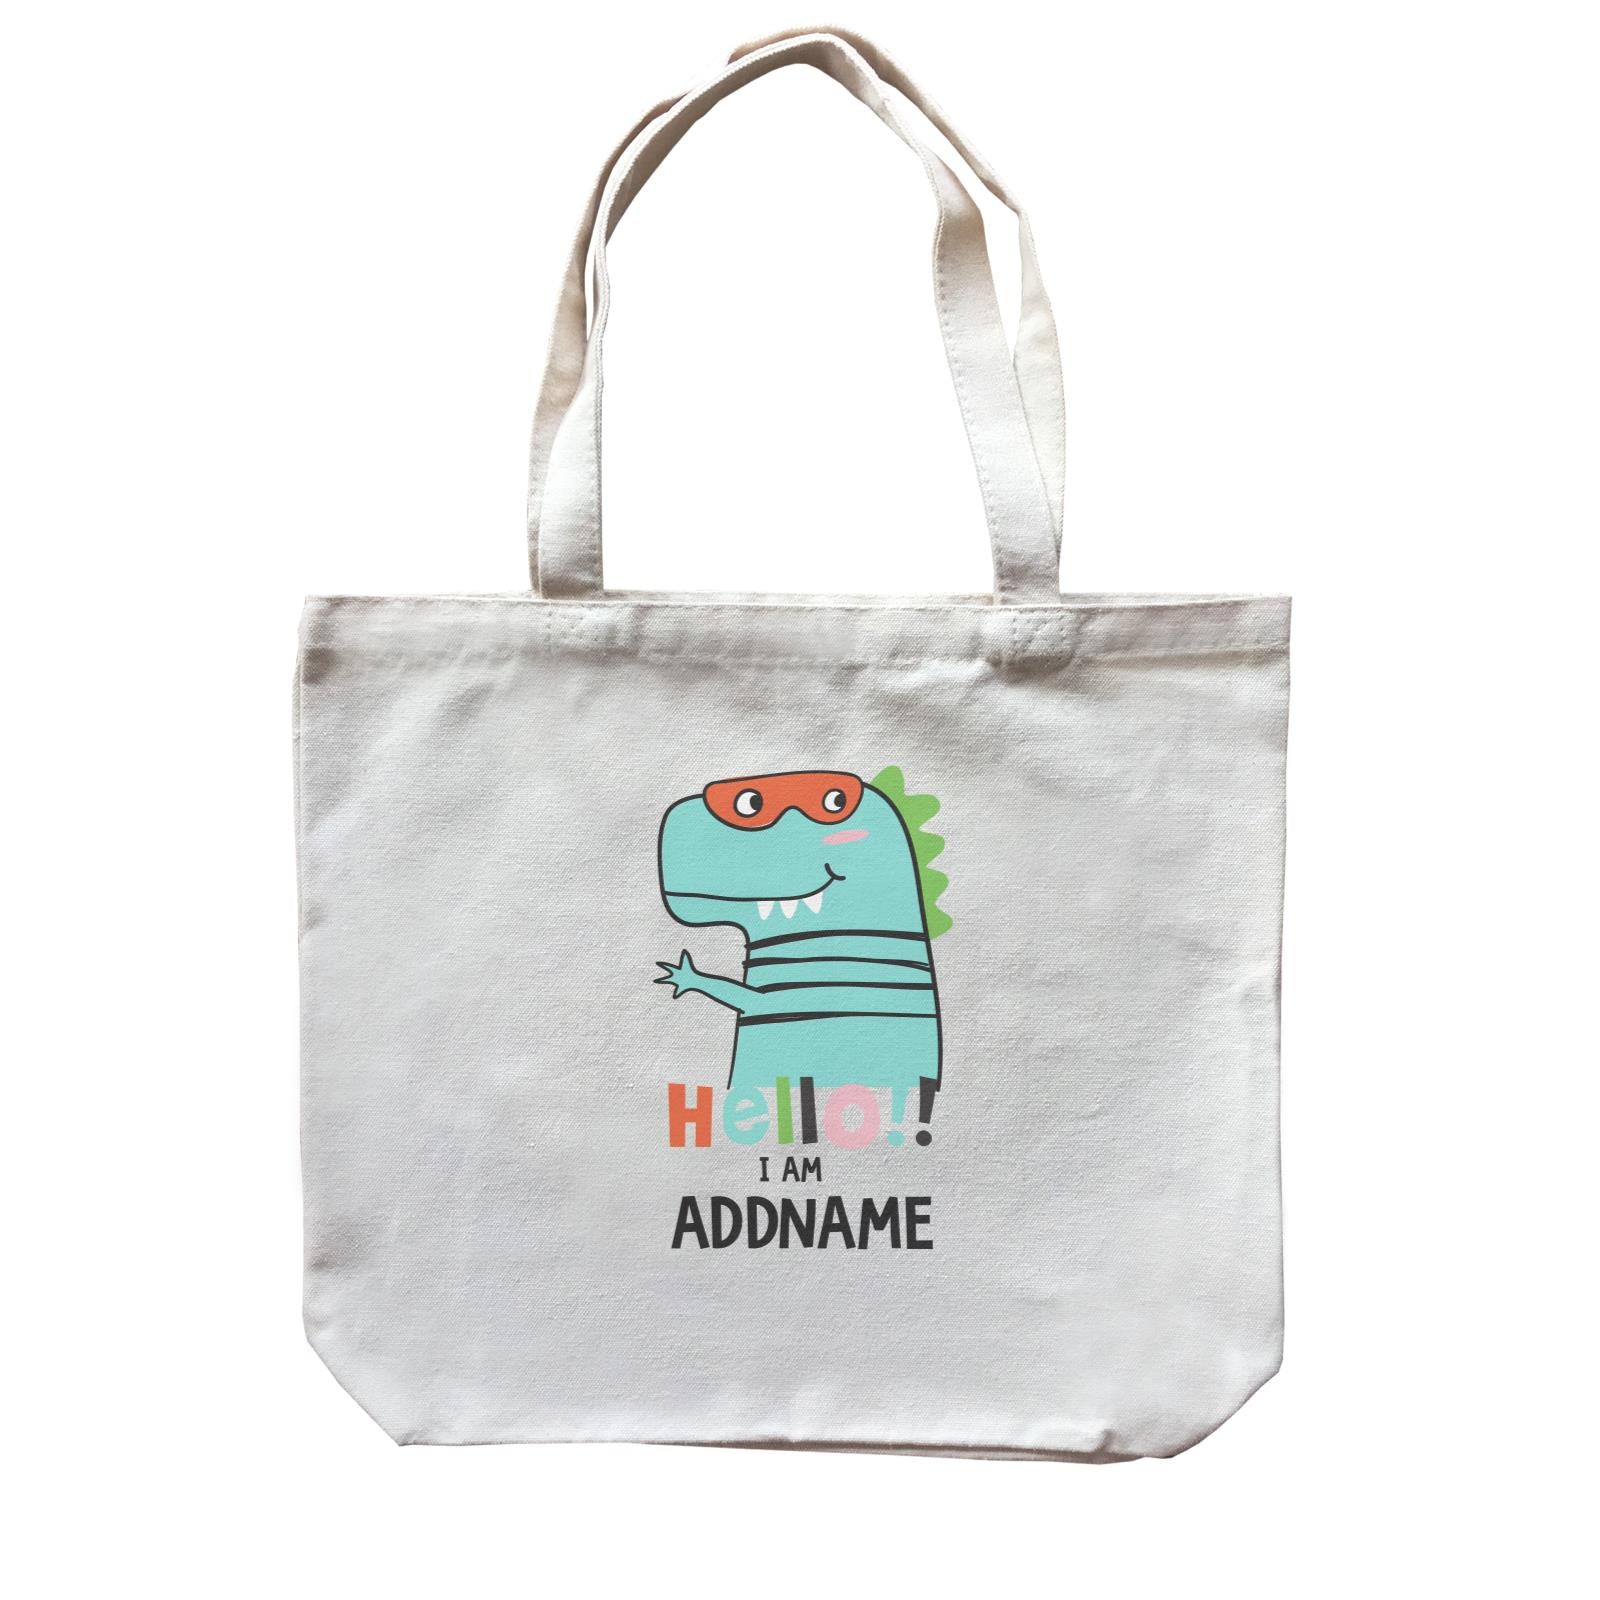 Cool Vibrant Series Hello I Am Dinosaur Addname Canvas Bag